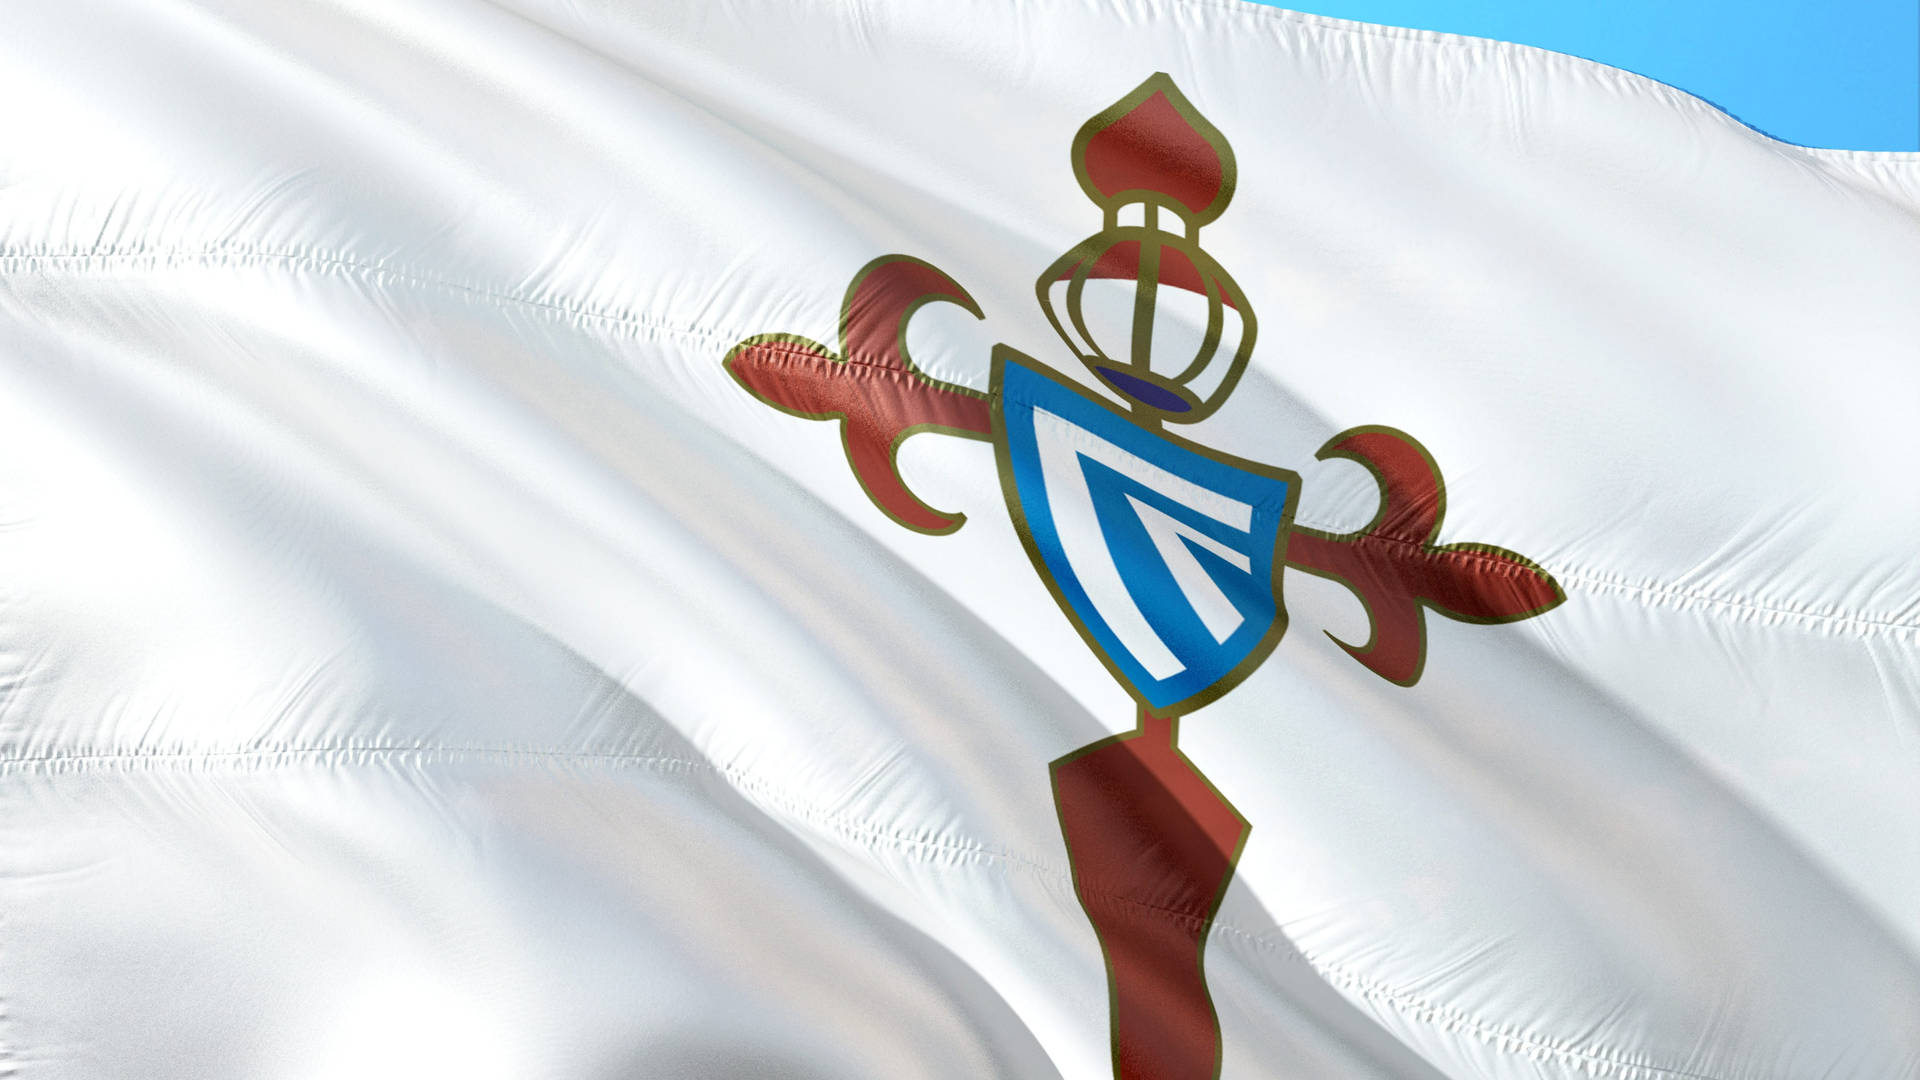 La Liga Celta De Vigo Flag Background